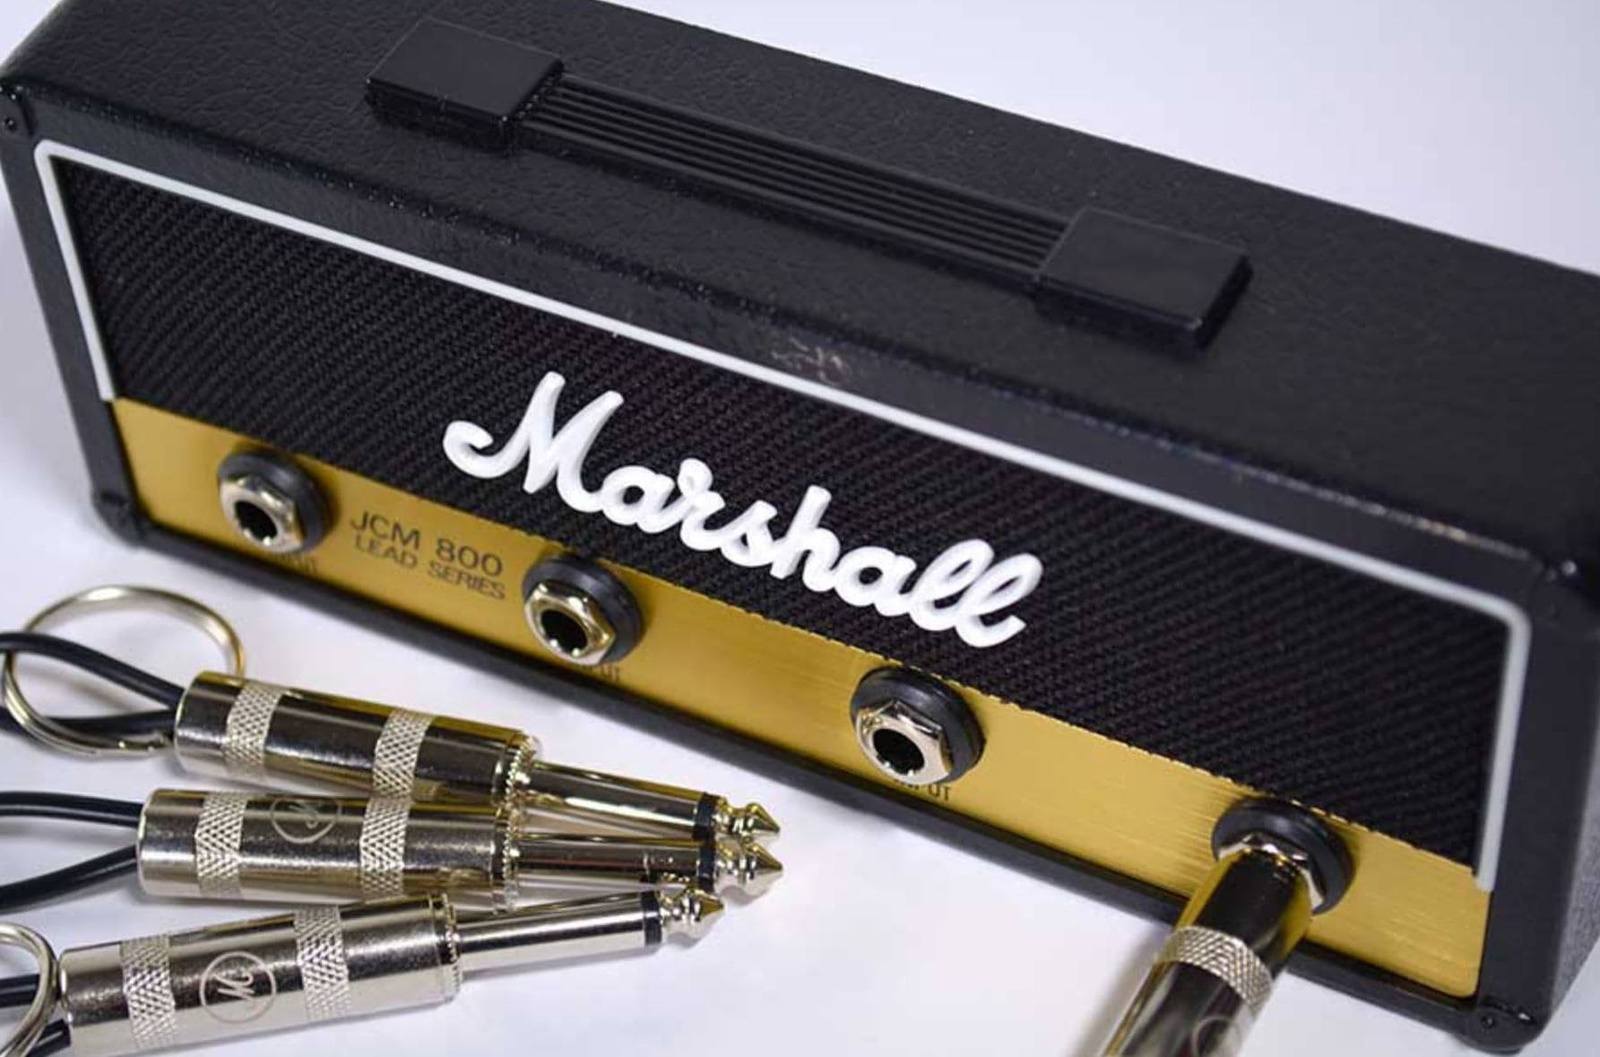 Marshall Guitar Amp Key Holder Version 2 – RAKAGO